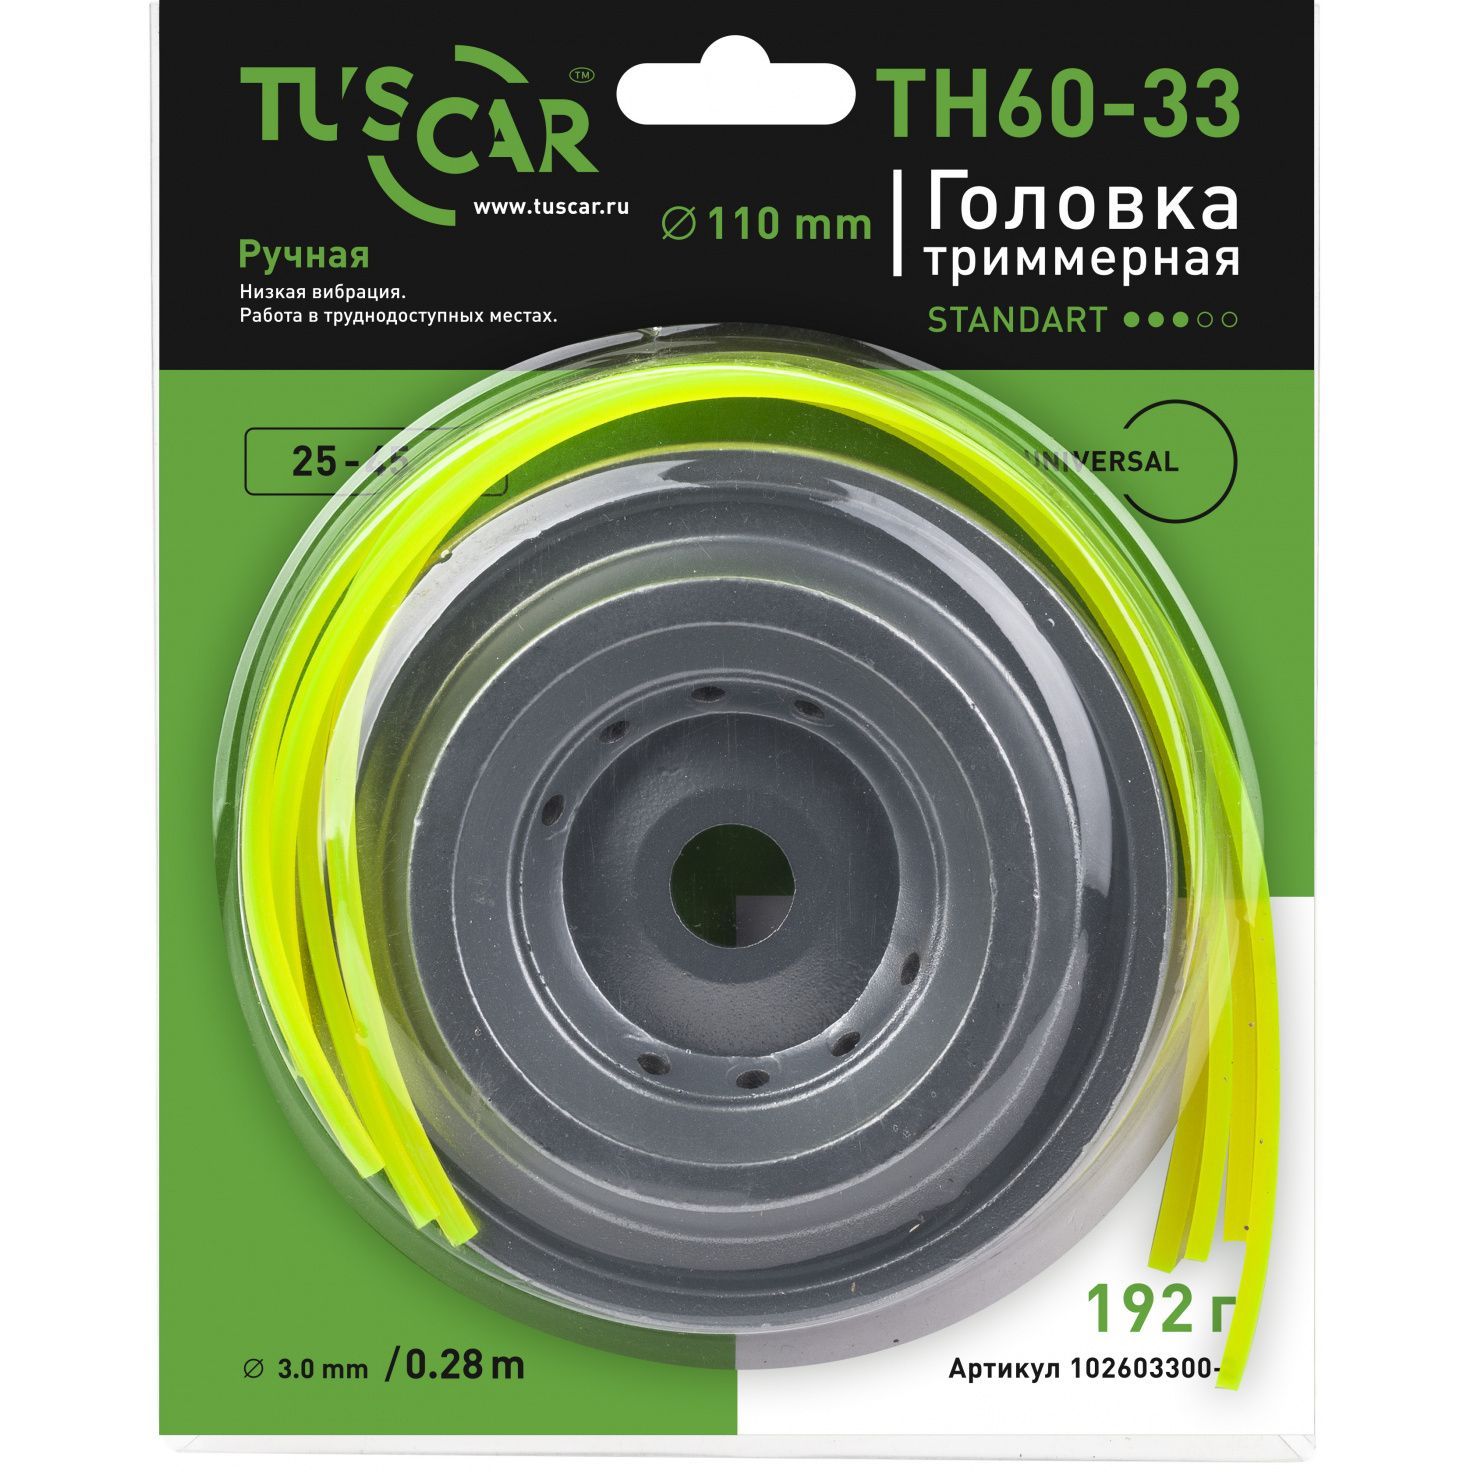 Головка триммерная Tuscar TH60-33 Standart universal 102603300-2 Tuscar от магазина Tehnorama